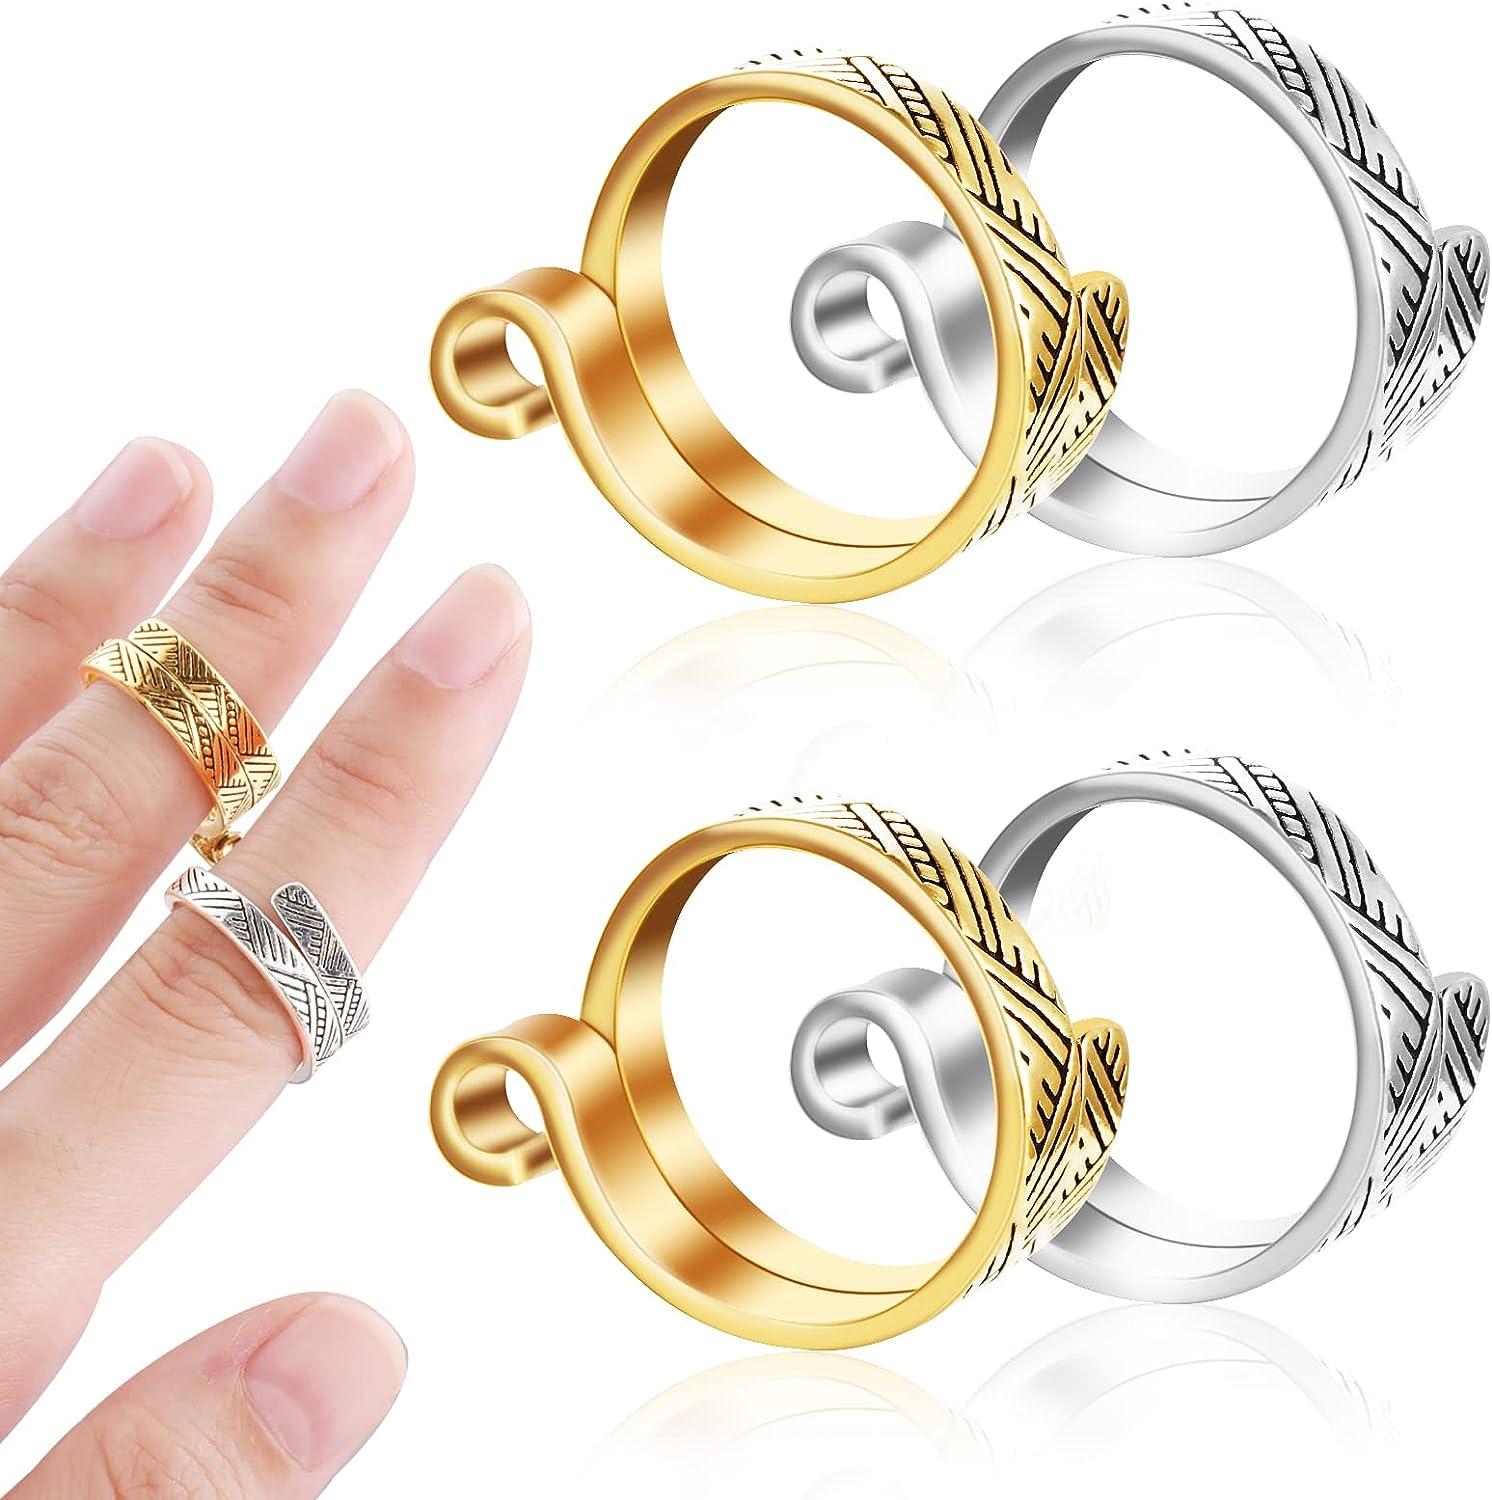  Knitting Ring for Finger Adjustable Crochet Ring Knitting Loop  Ring for Faster Knitting Crochet Accessories (1-Gold)